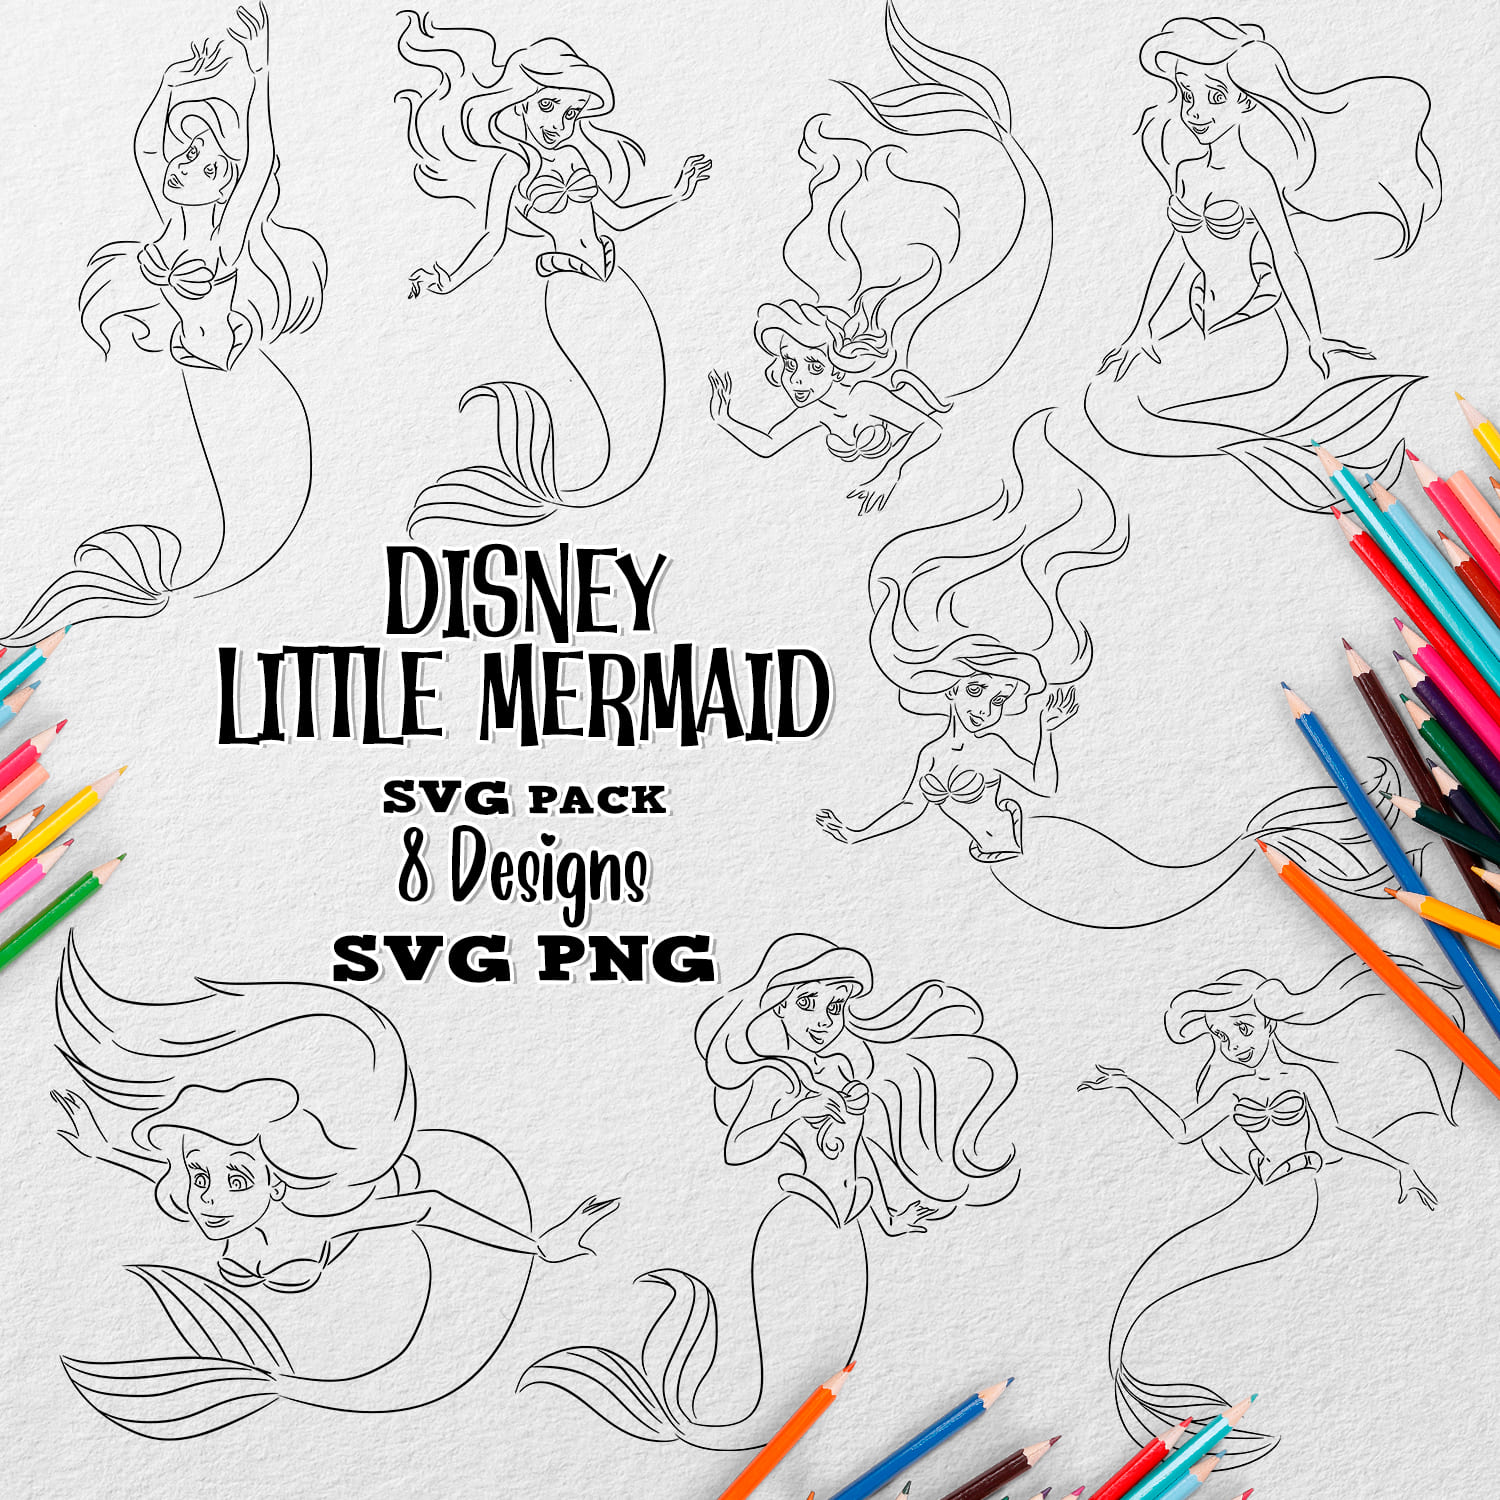 Disney Little Mermaid Svg.